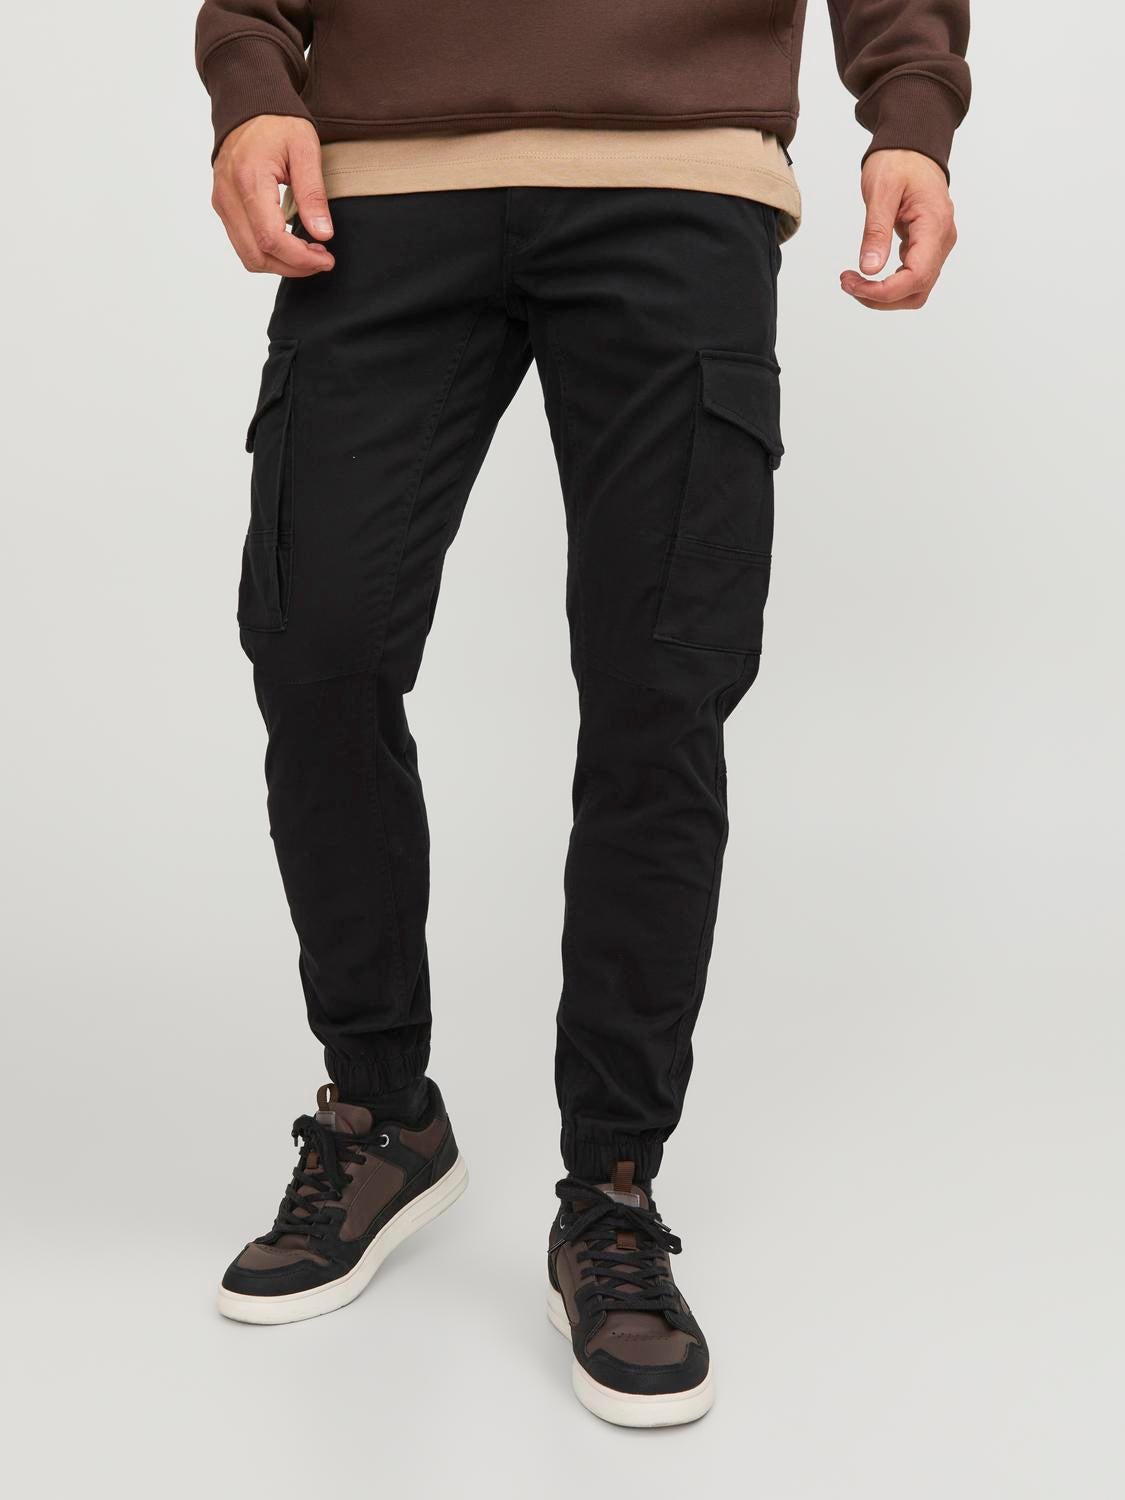 Fashion Men's Pants Pocket Urban Straight Leg Trousers Jogging Joggers Cargo  Pant Casual Skinny Stretchy Pencil Pants - Casual Pants - AliExpress